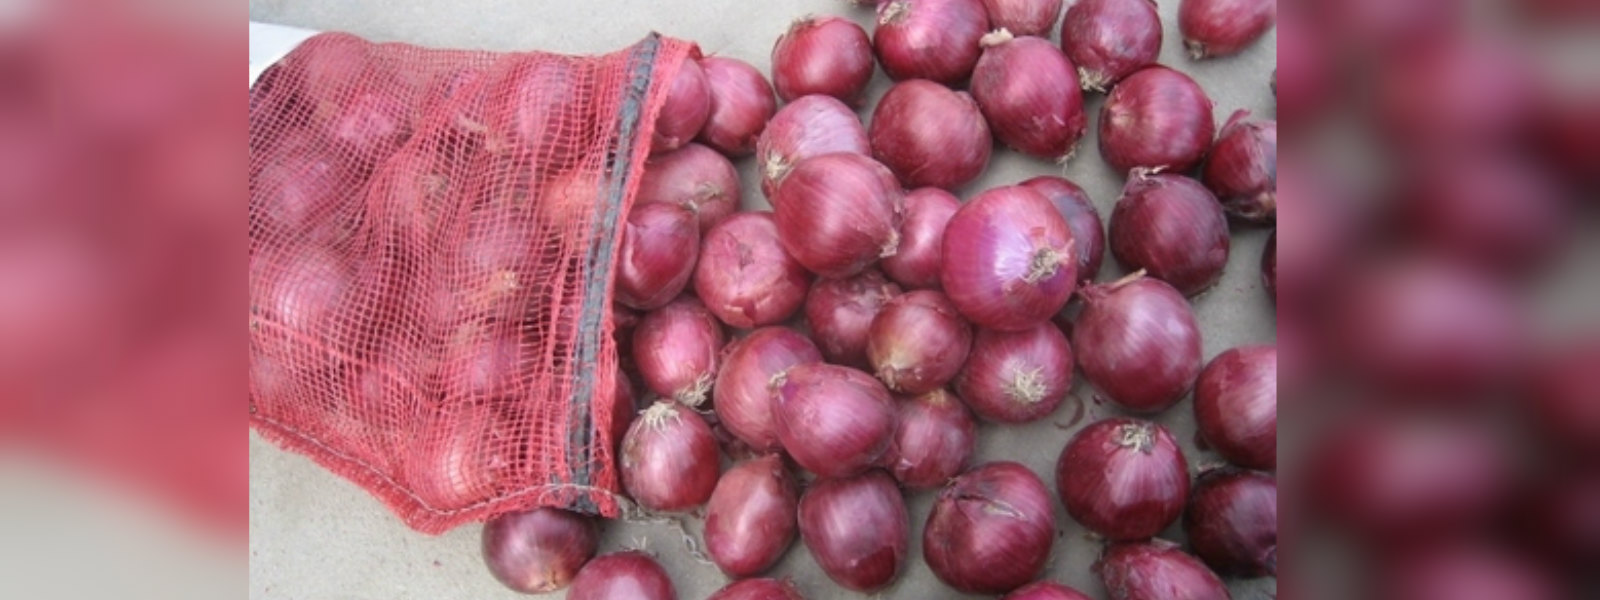 Maximum retail price of Rs.190 on big onions 